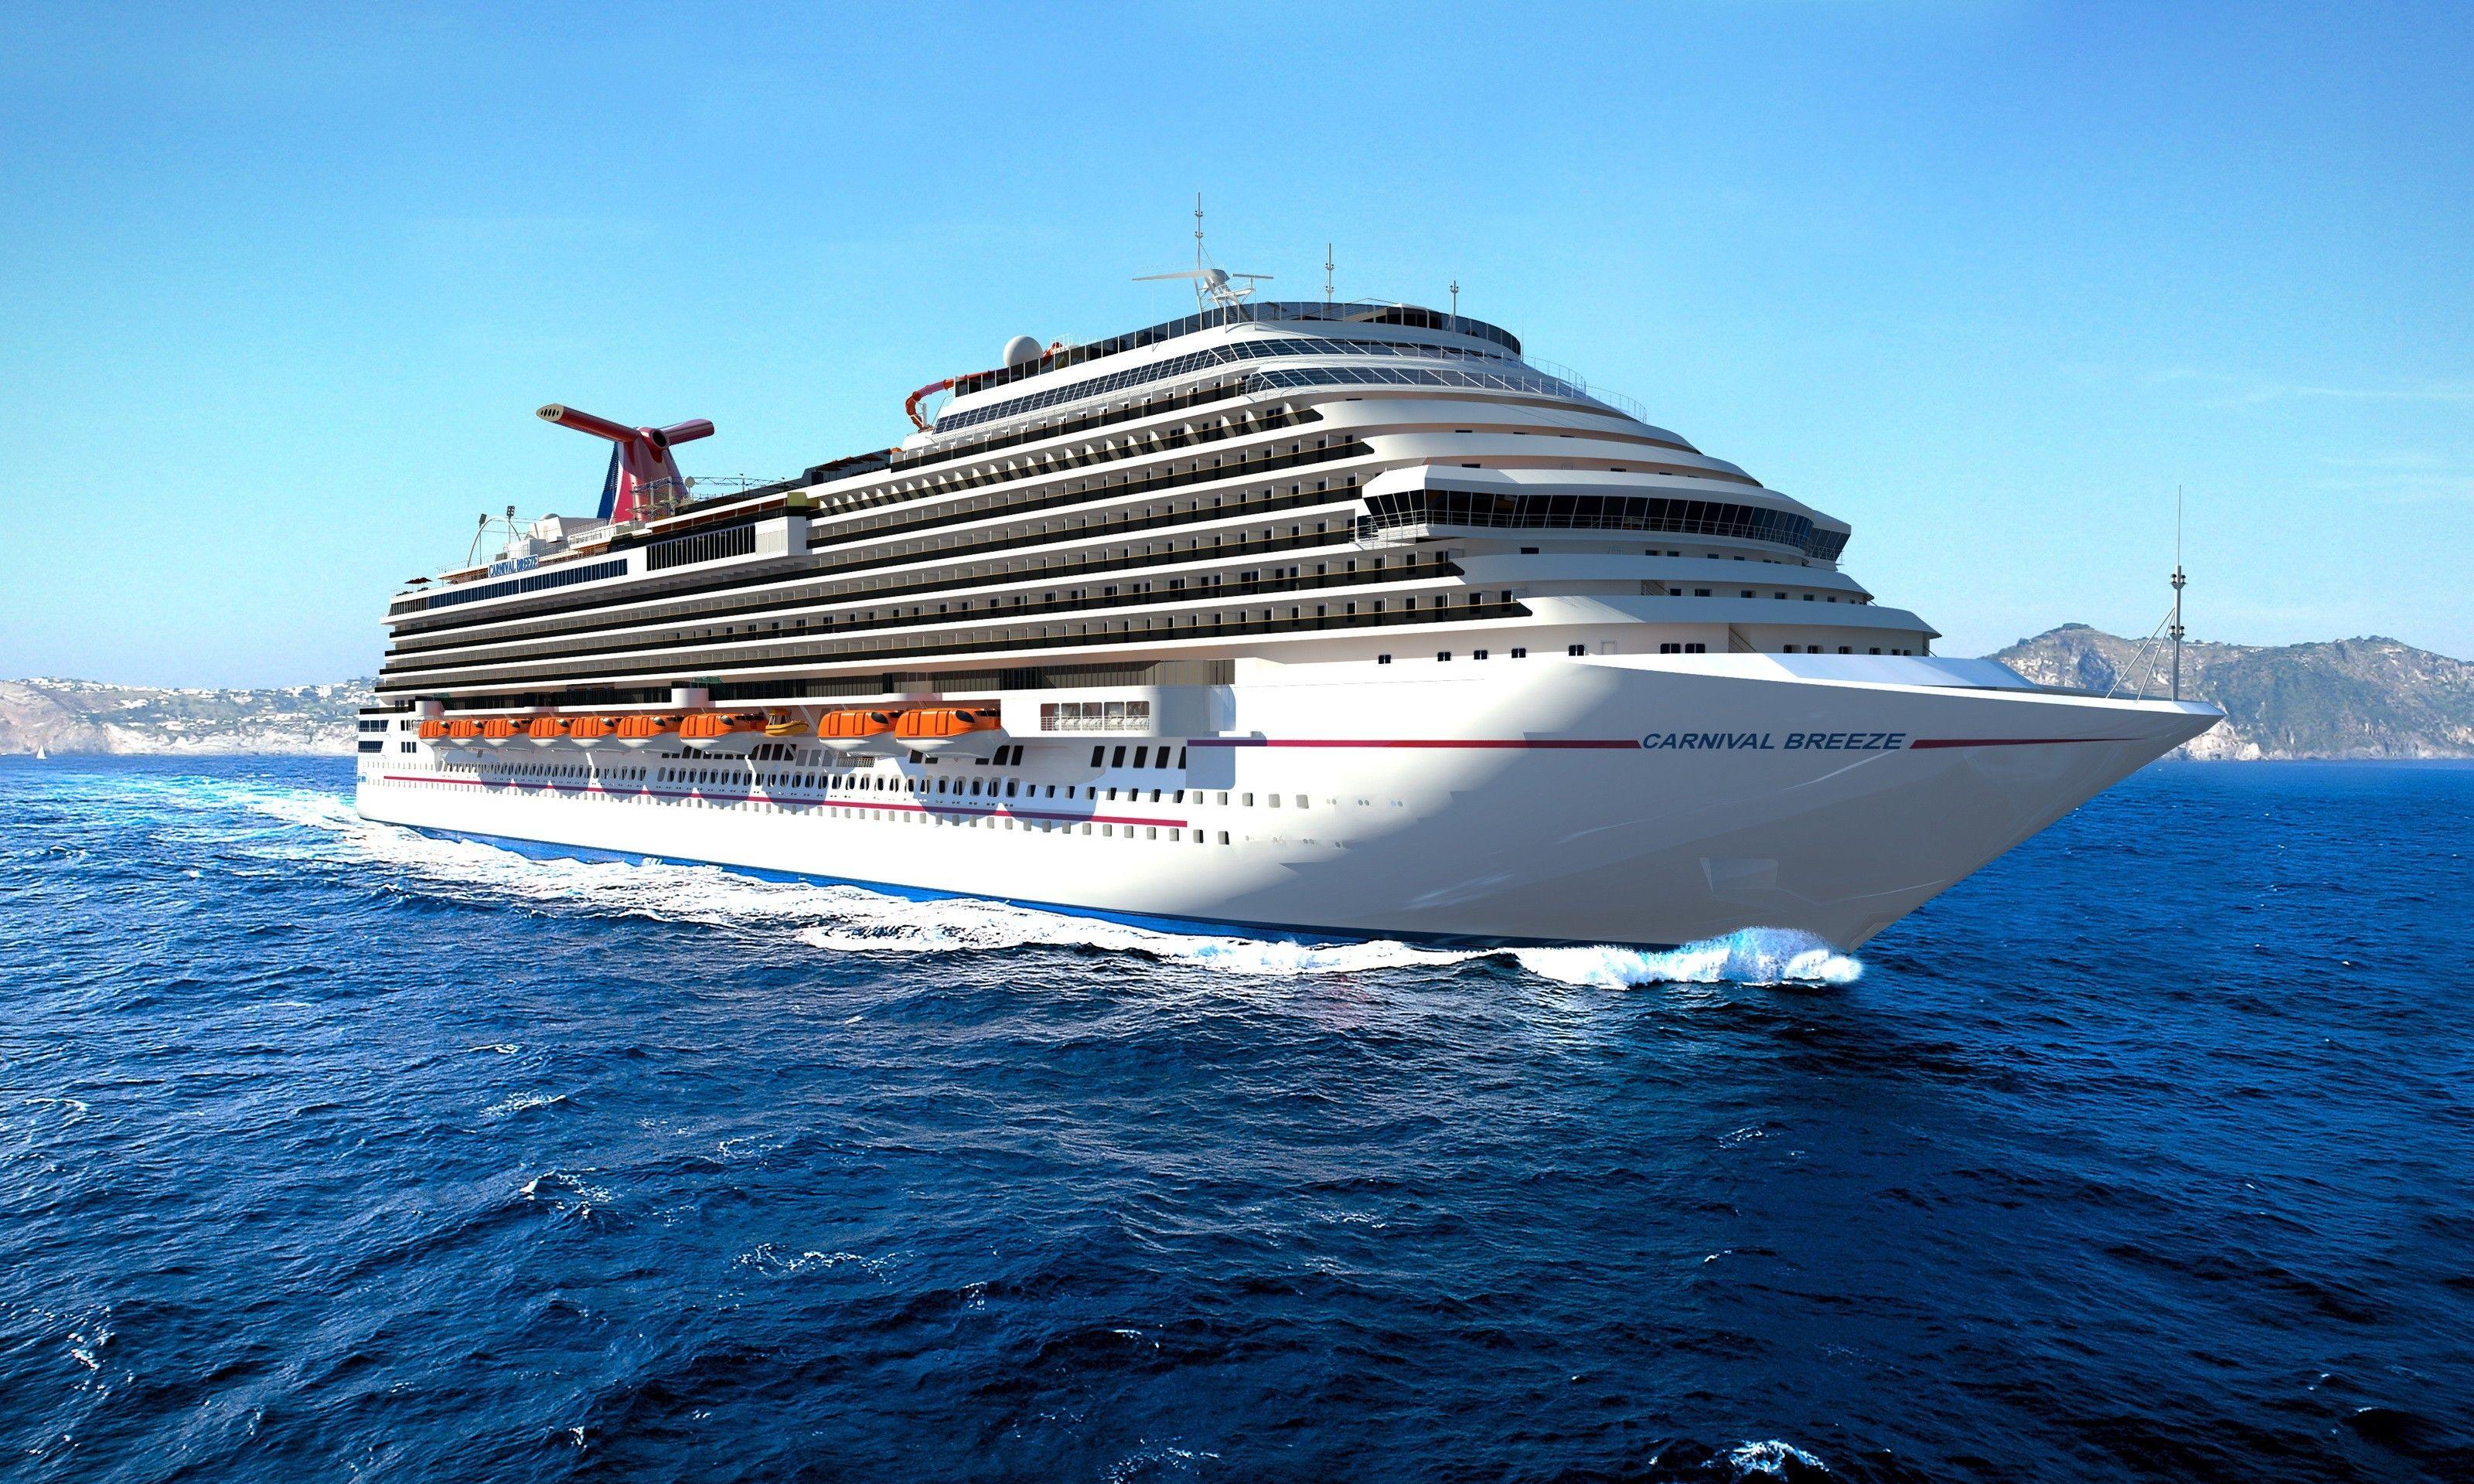 cruise ship photos free download